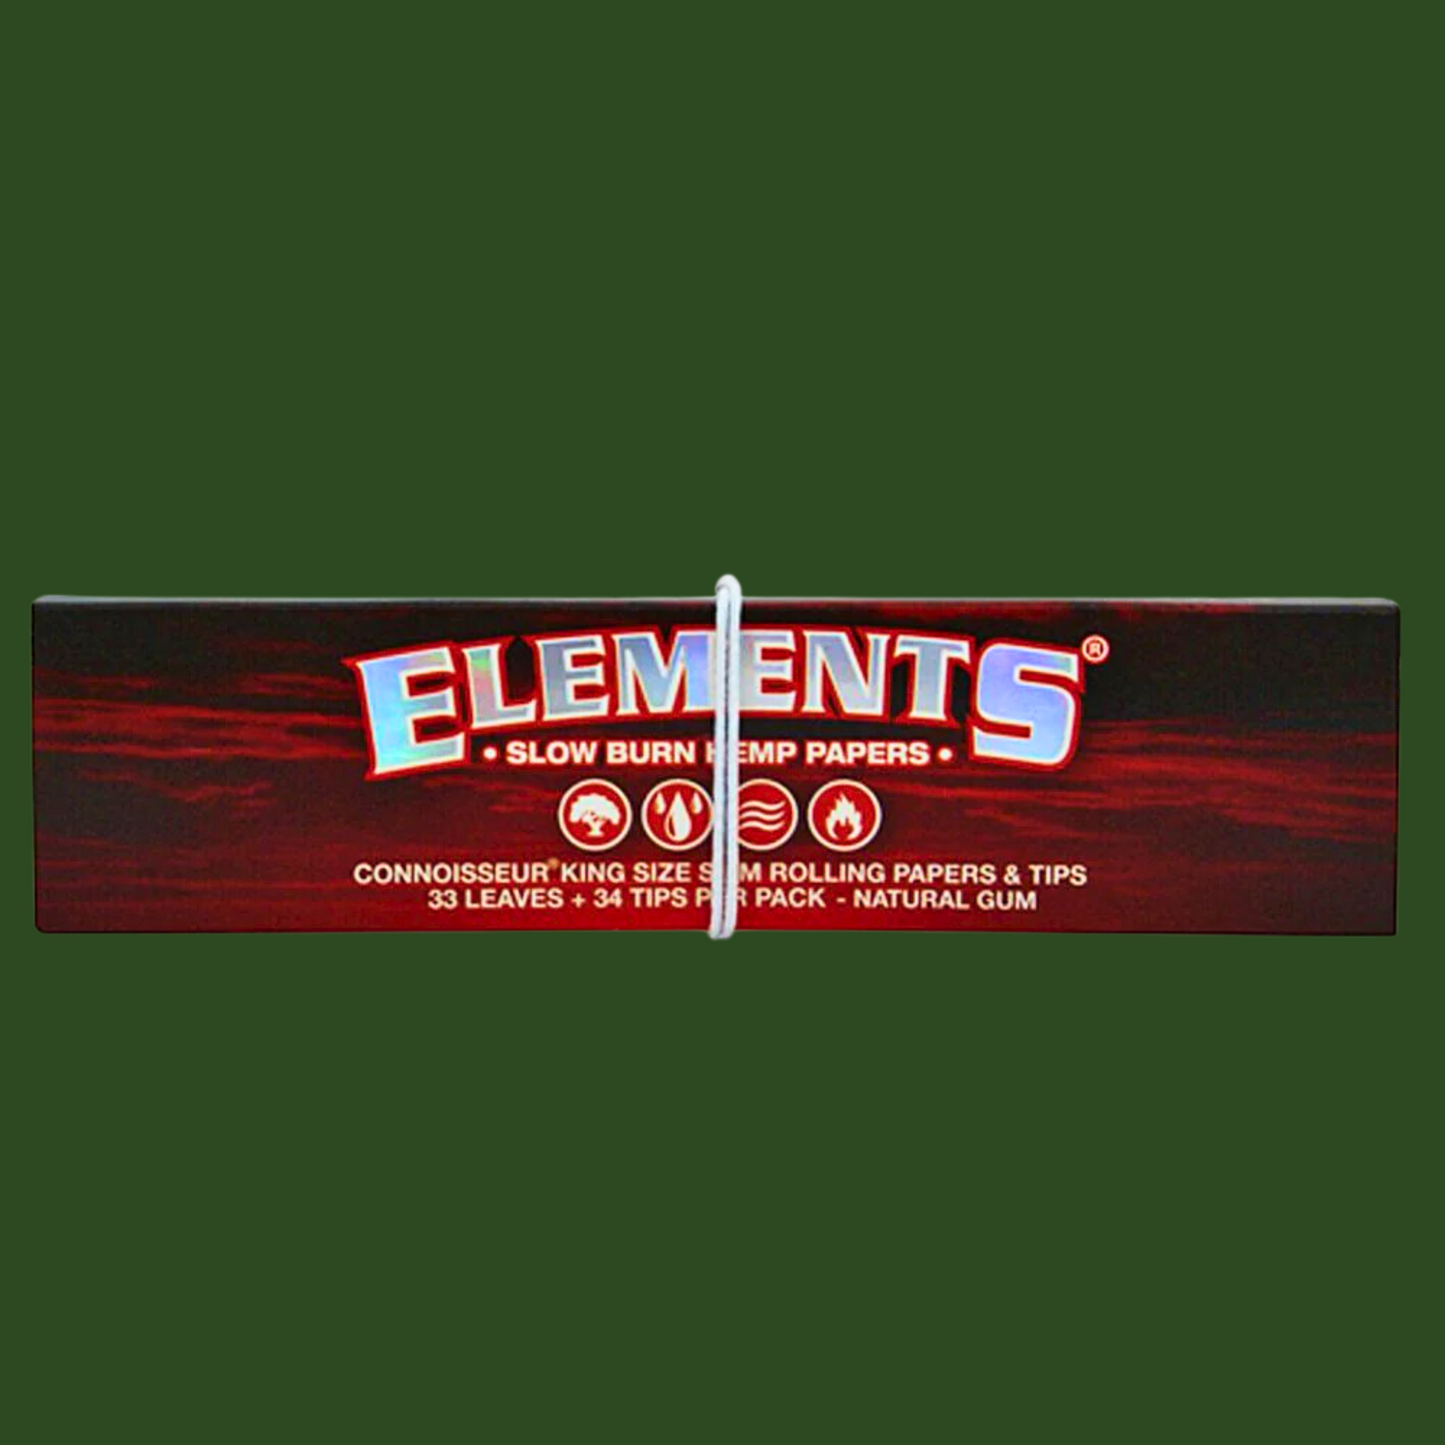 Elements Hemp Papers